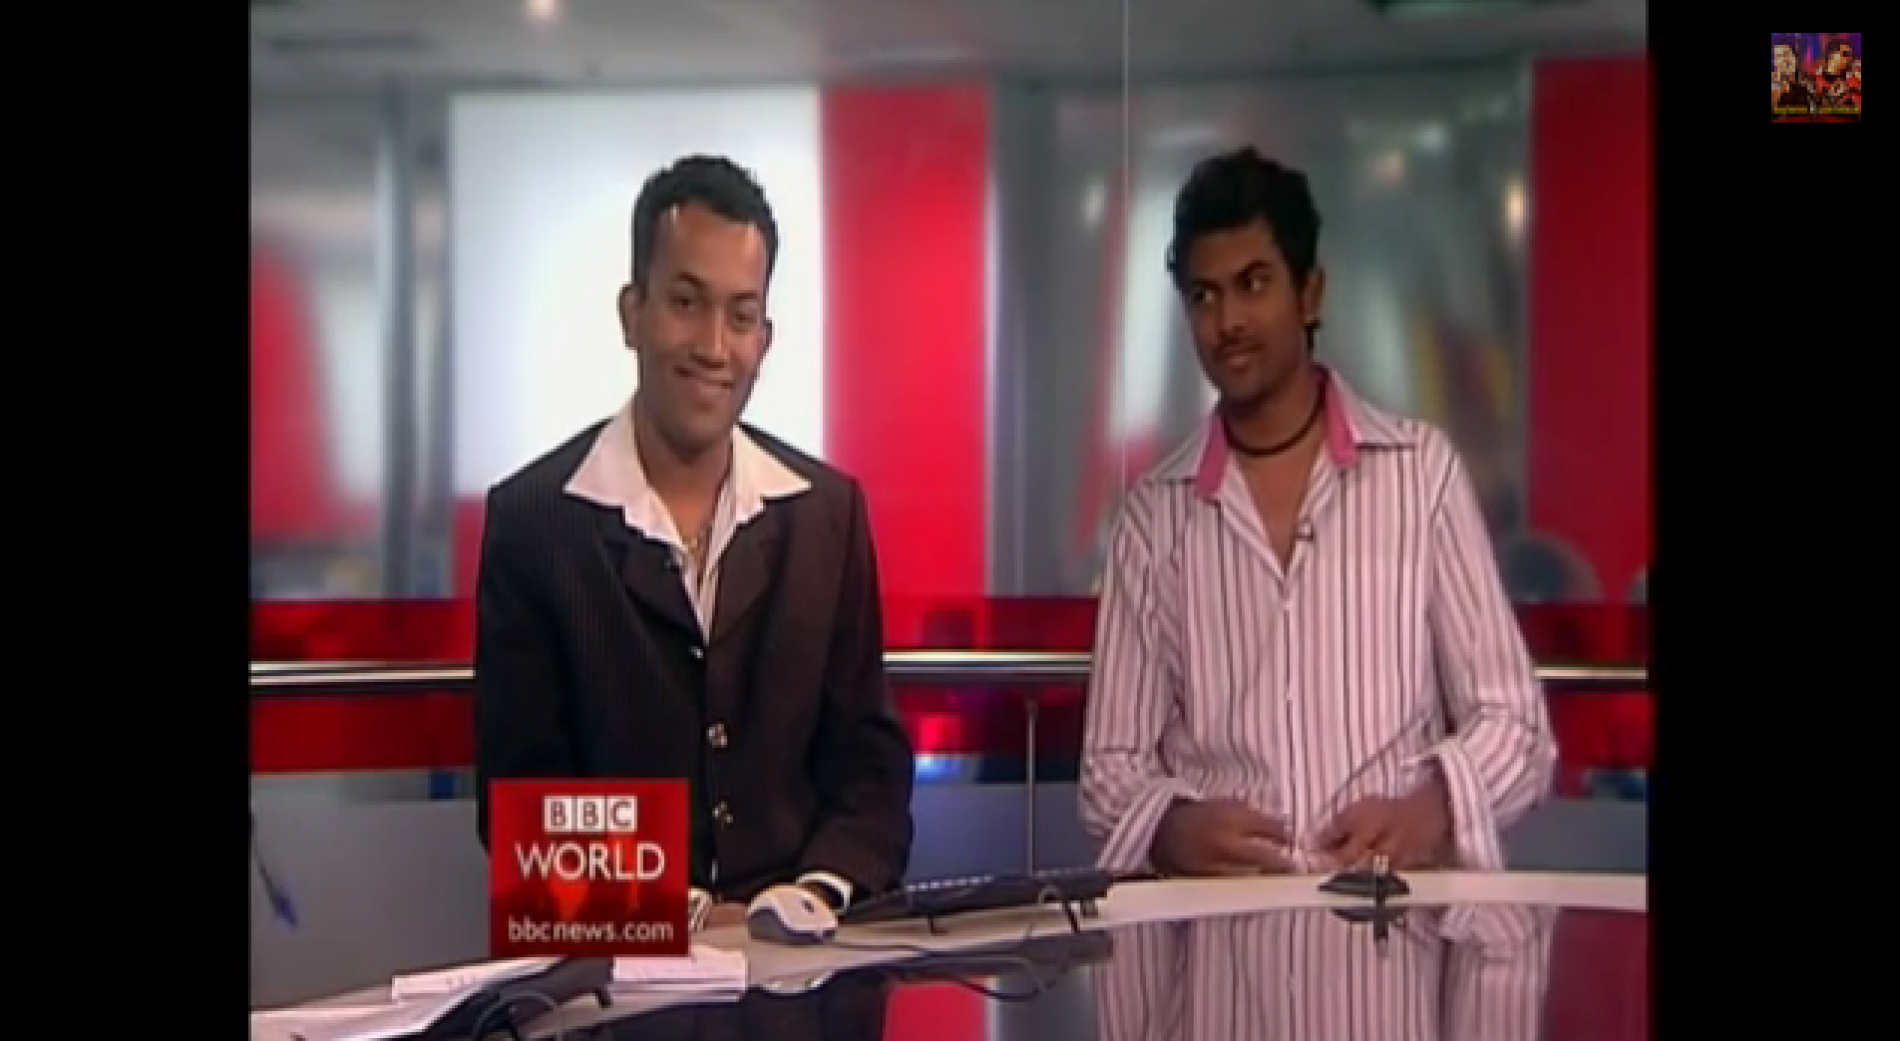 BNS on BBC